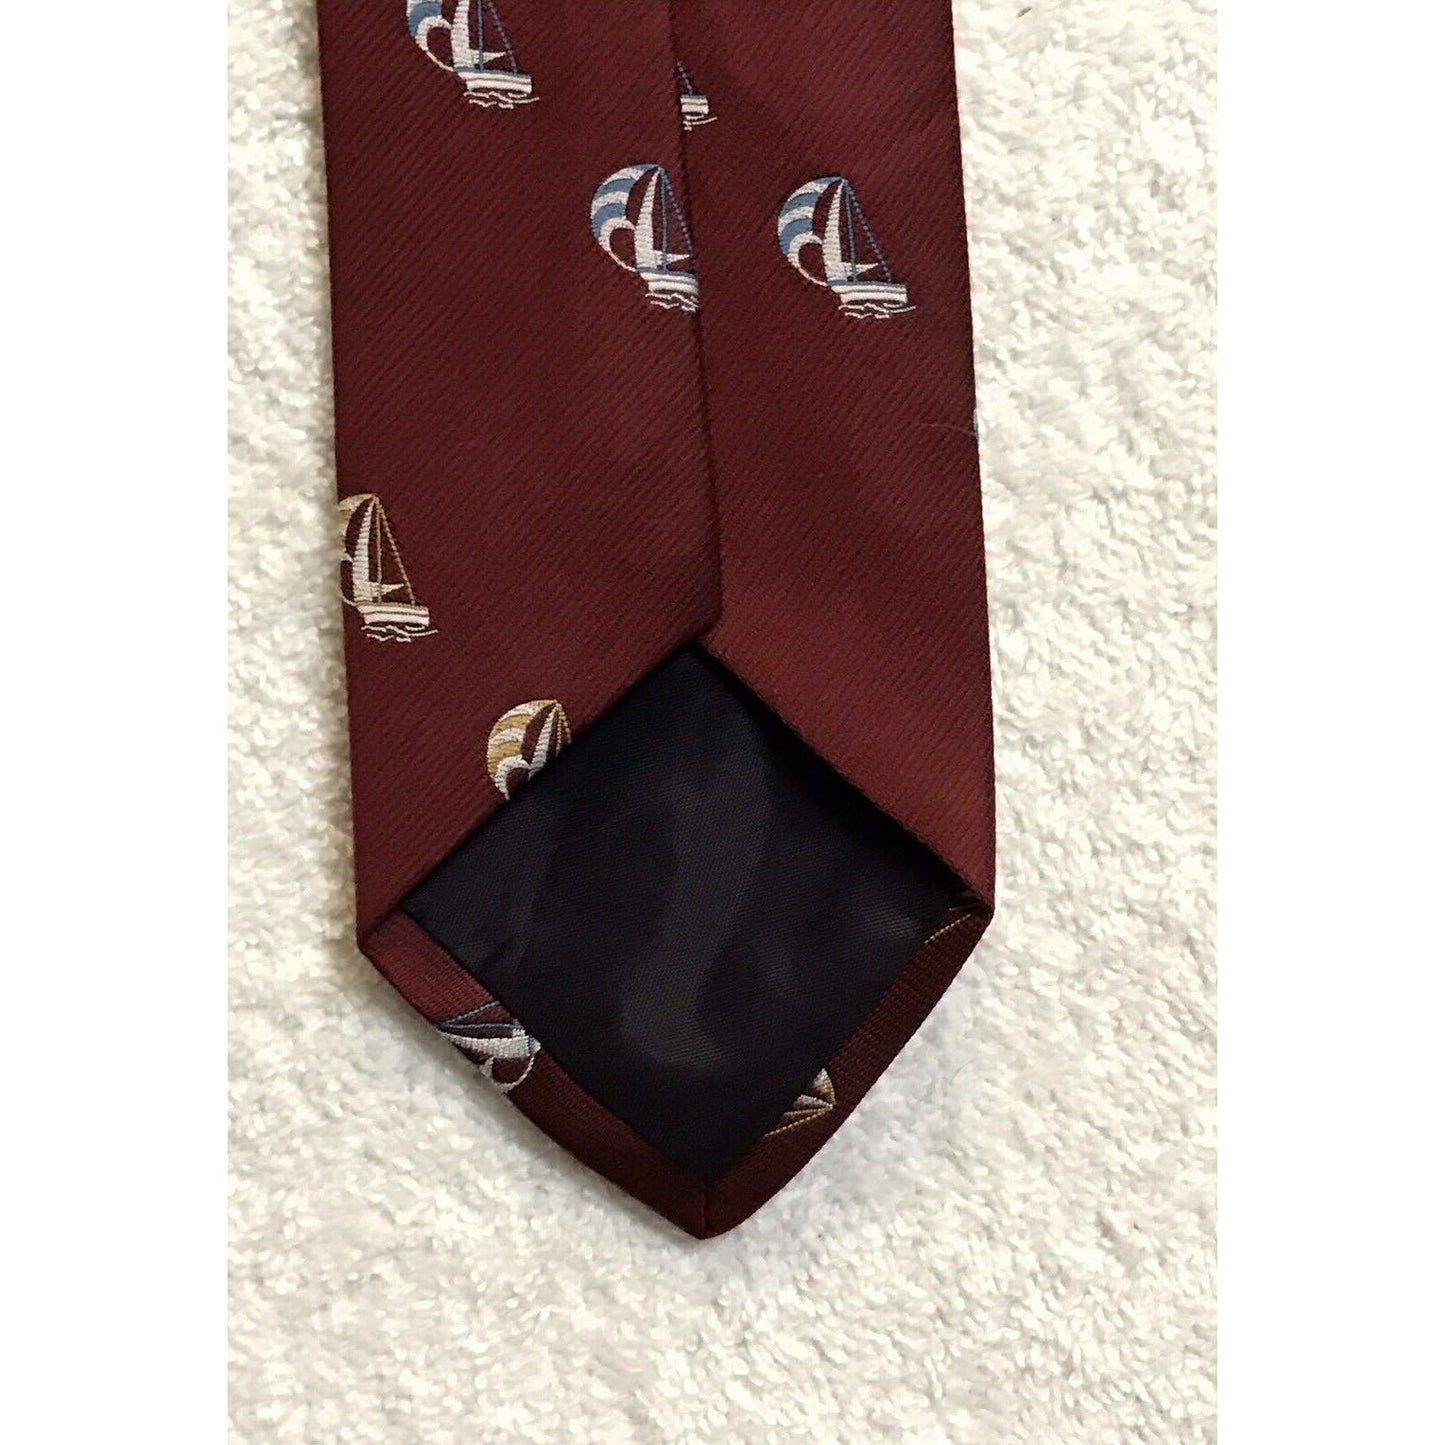 Shermans Red Sailboats Vintage Novelty Tie Necktie 100% Polyester